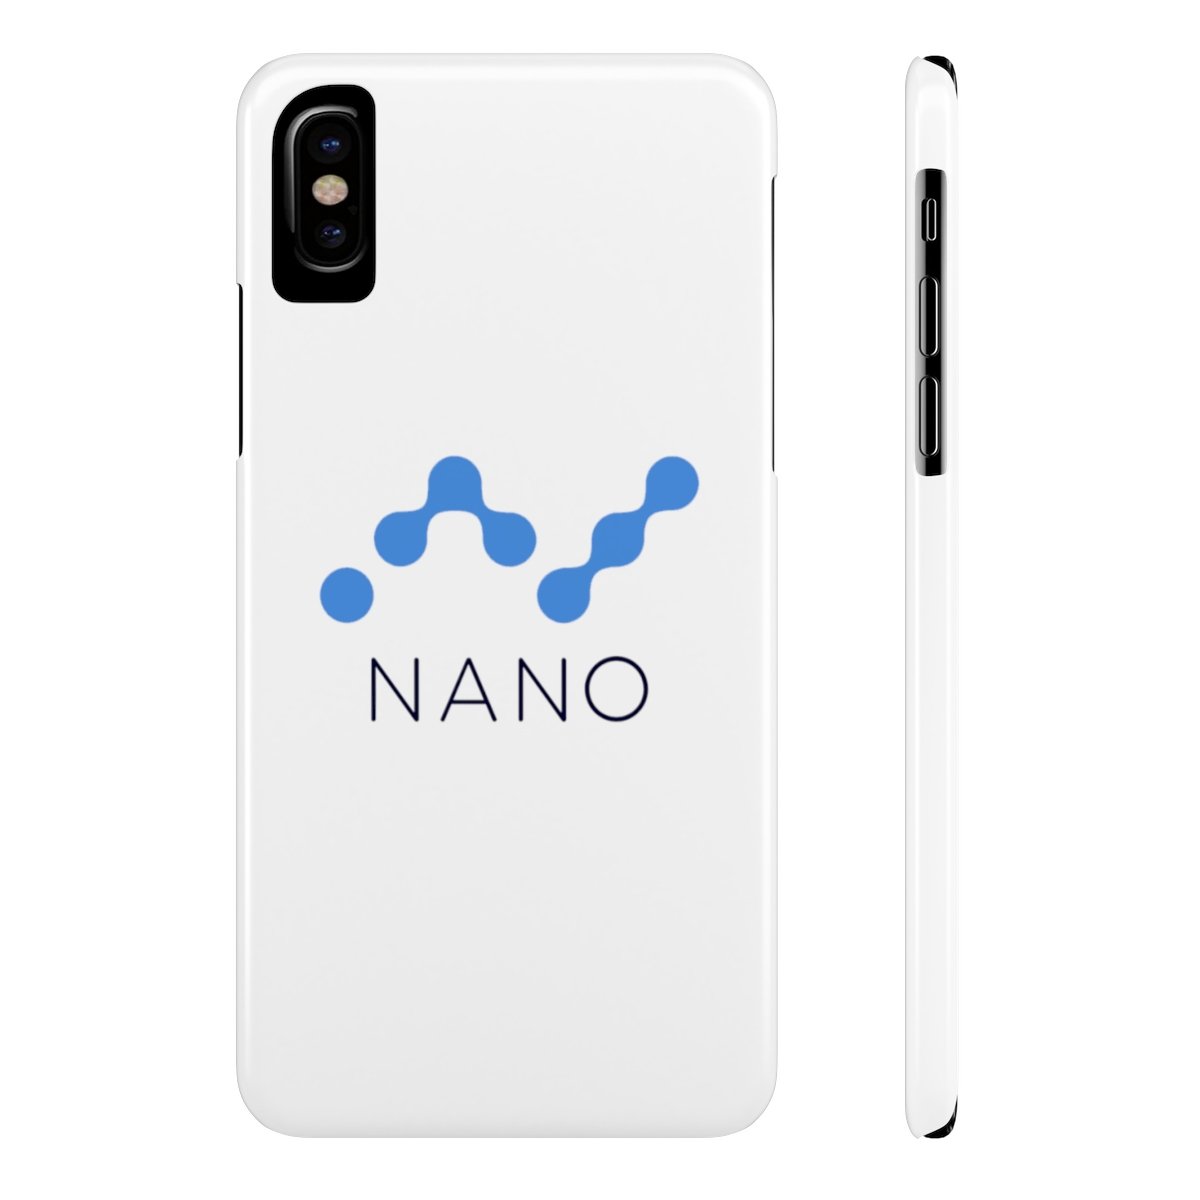 Nano - Case Mate Slim Phone Cases TCP1607 iPhone X Slim Official Crypto  Merch